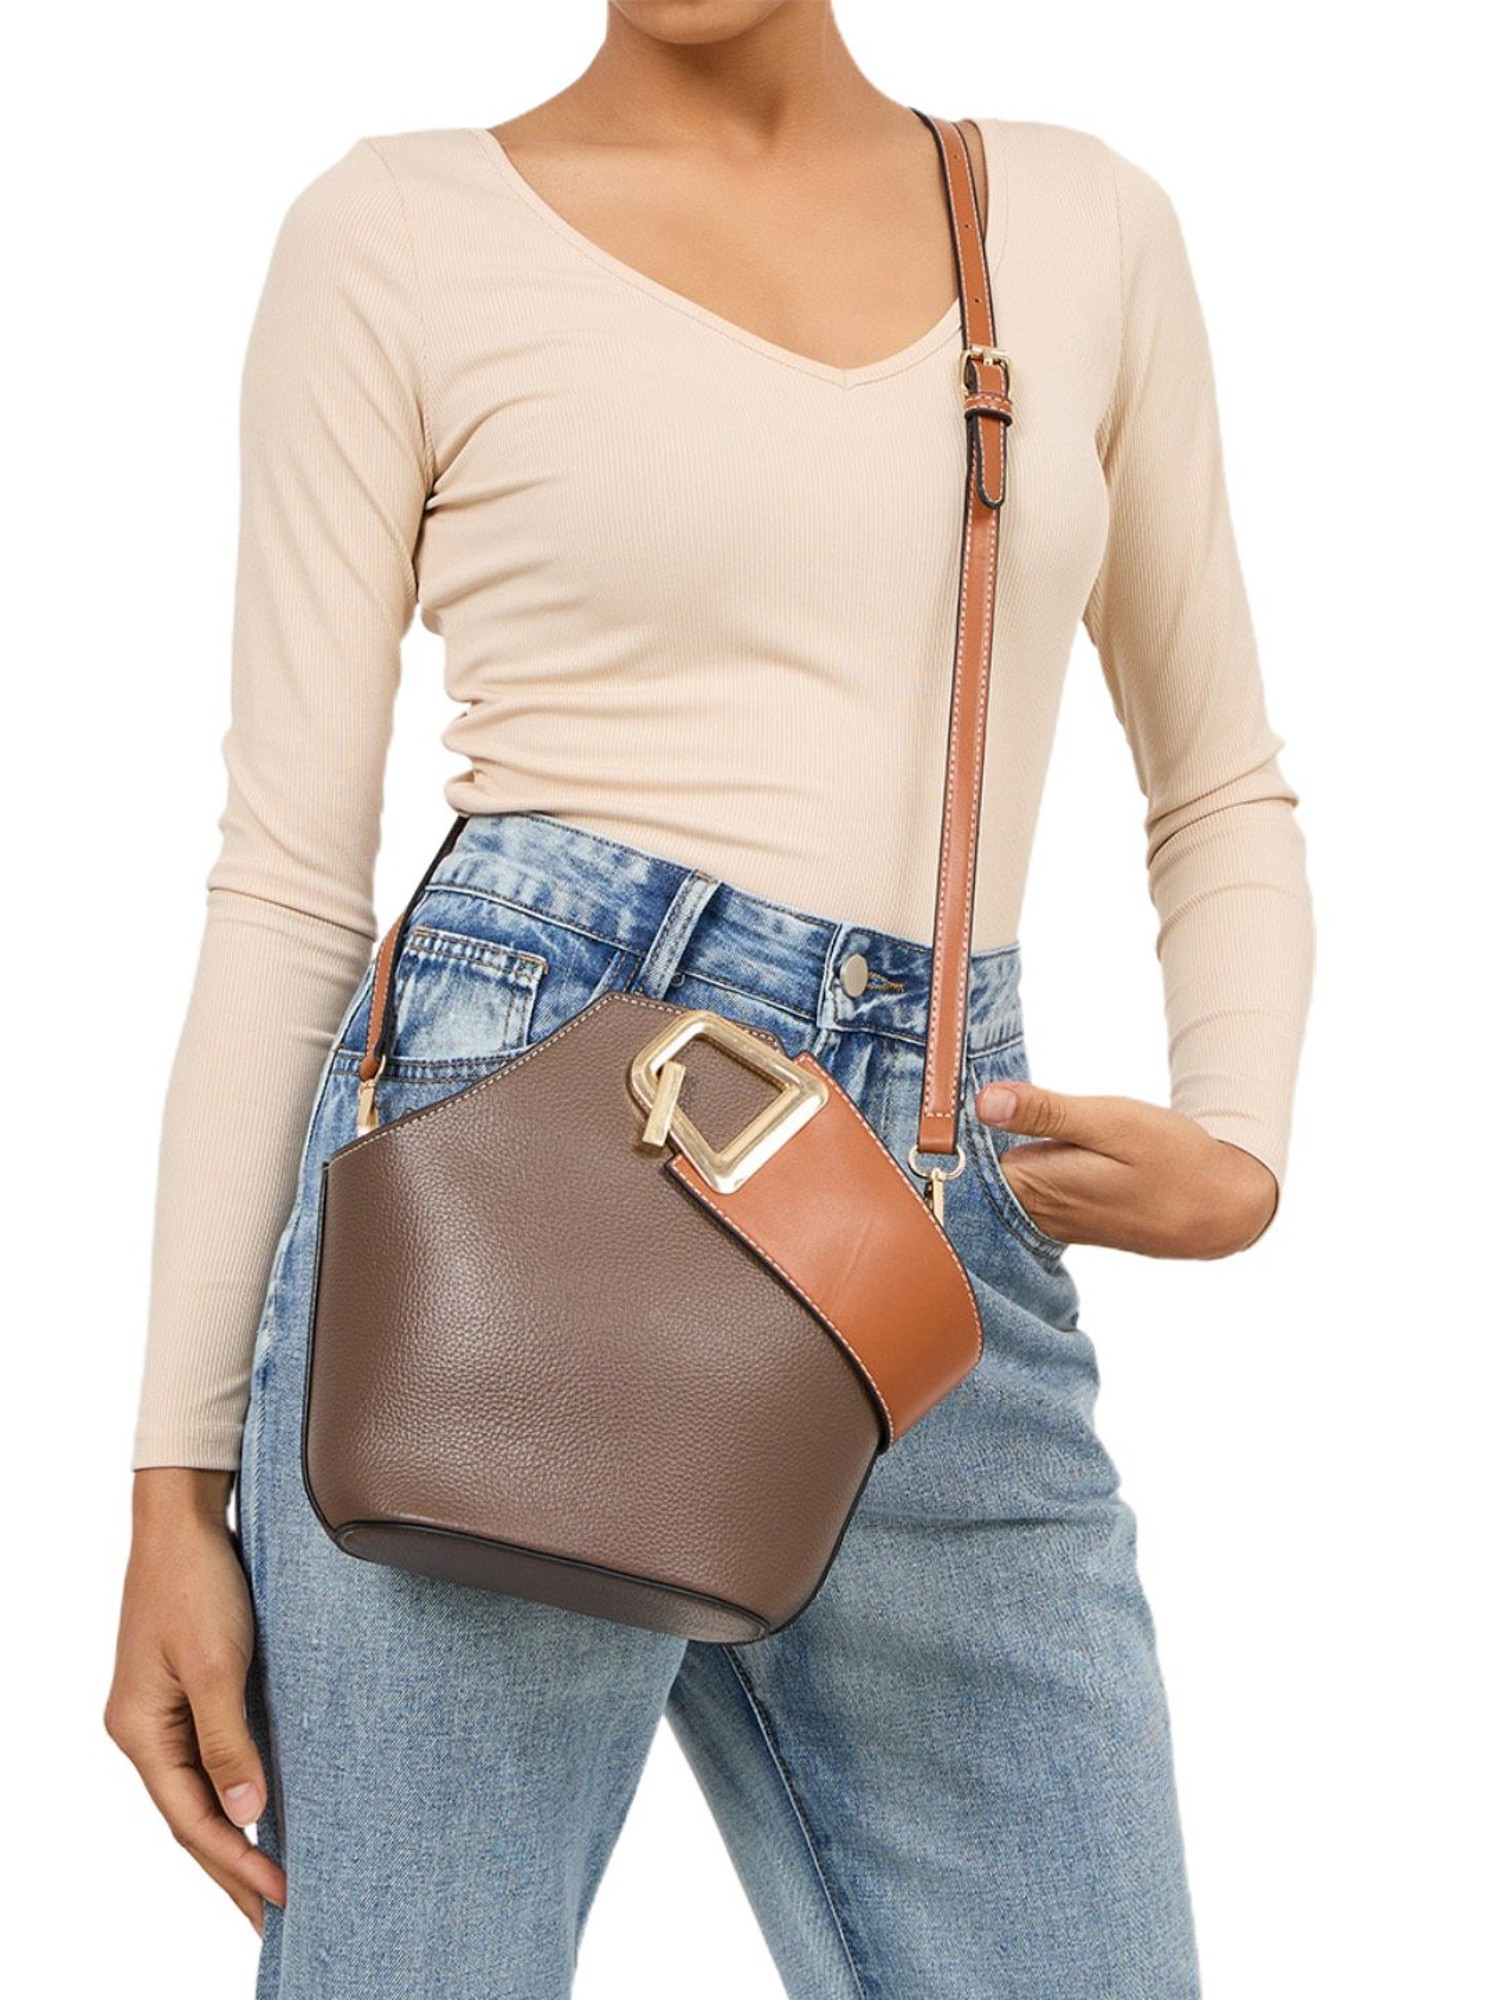 Buy Styli Brown Printed Satchel Handbag at Best Price @ Tata CLiQ